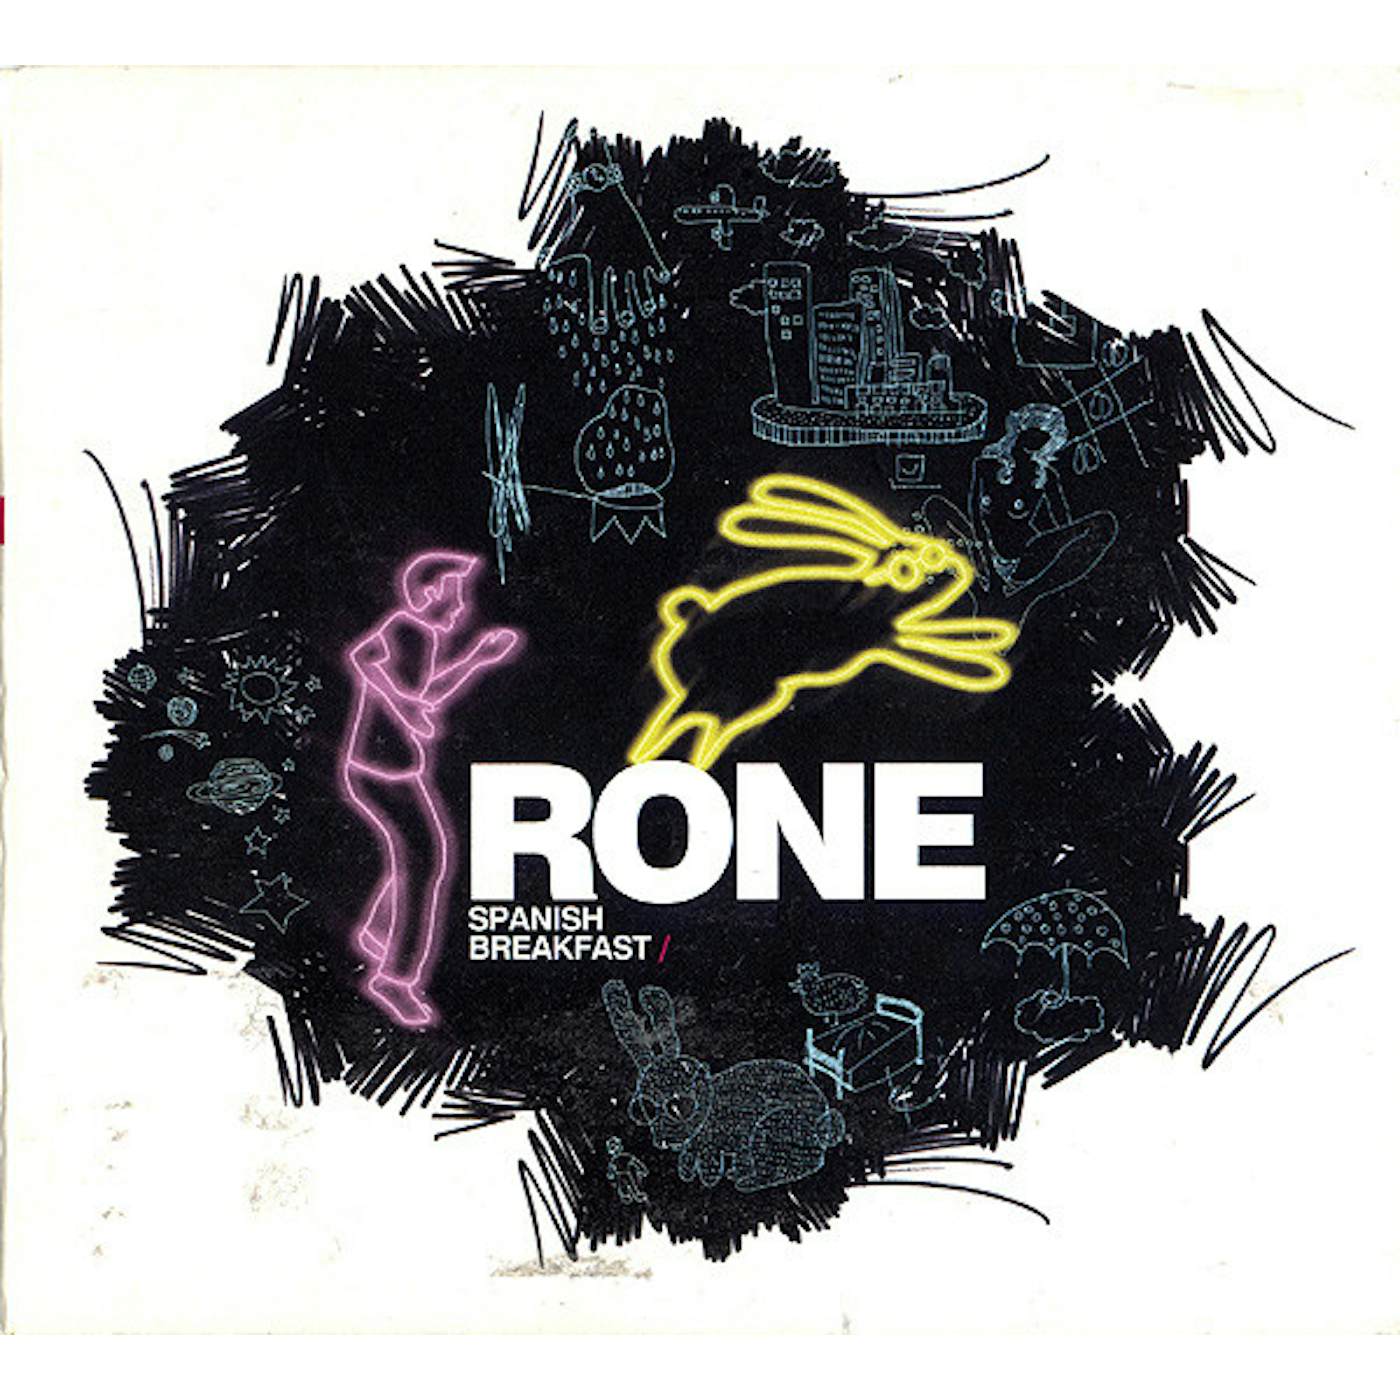 Rone Spanish Breakfast Vinyl Record